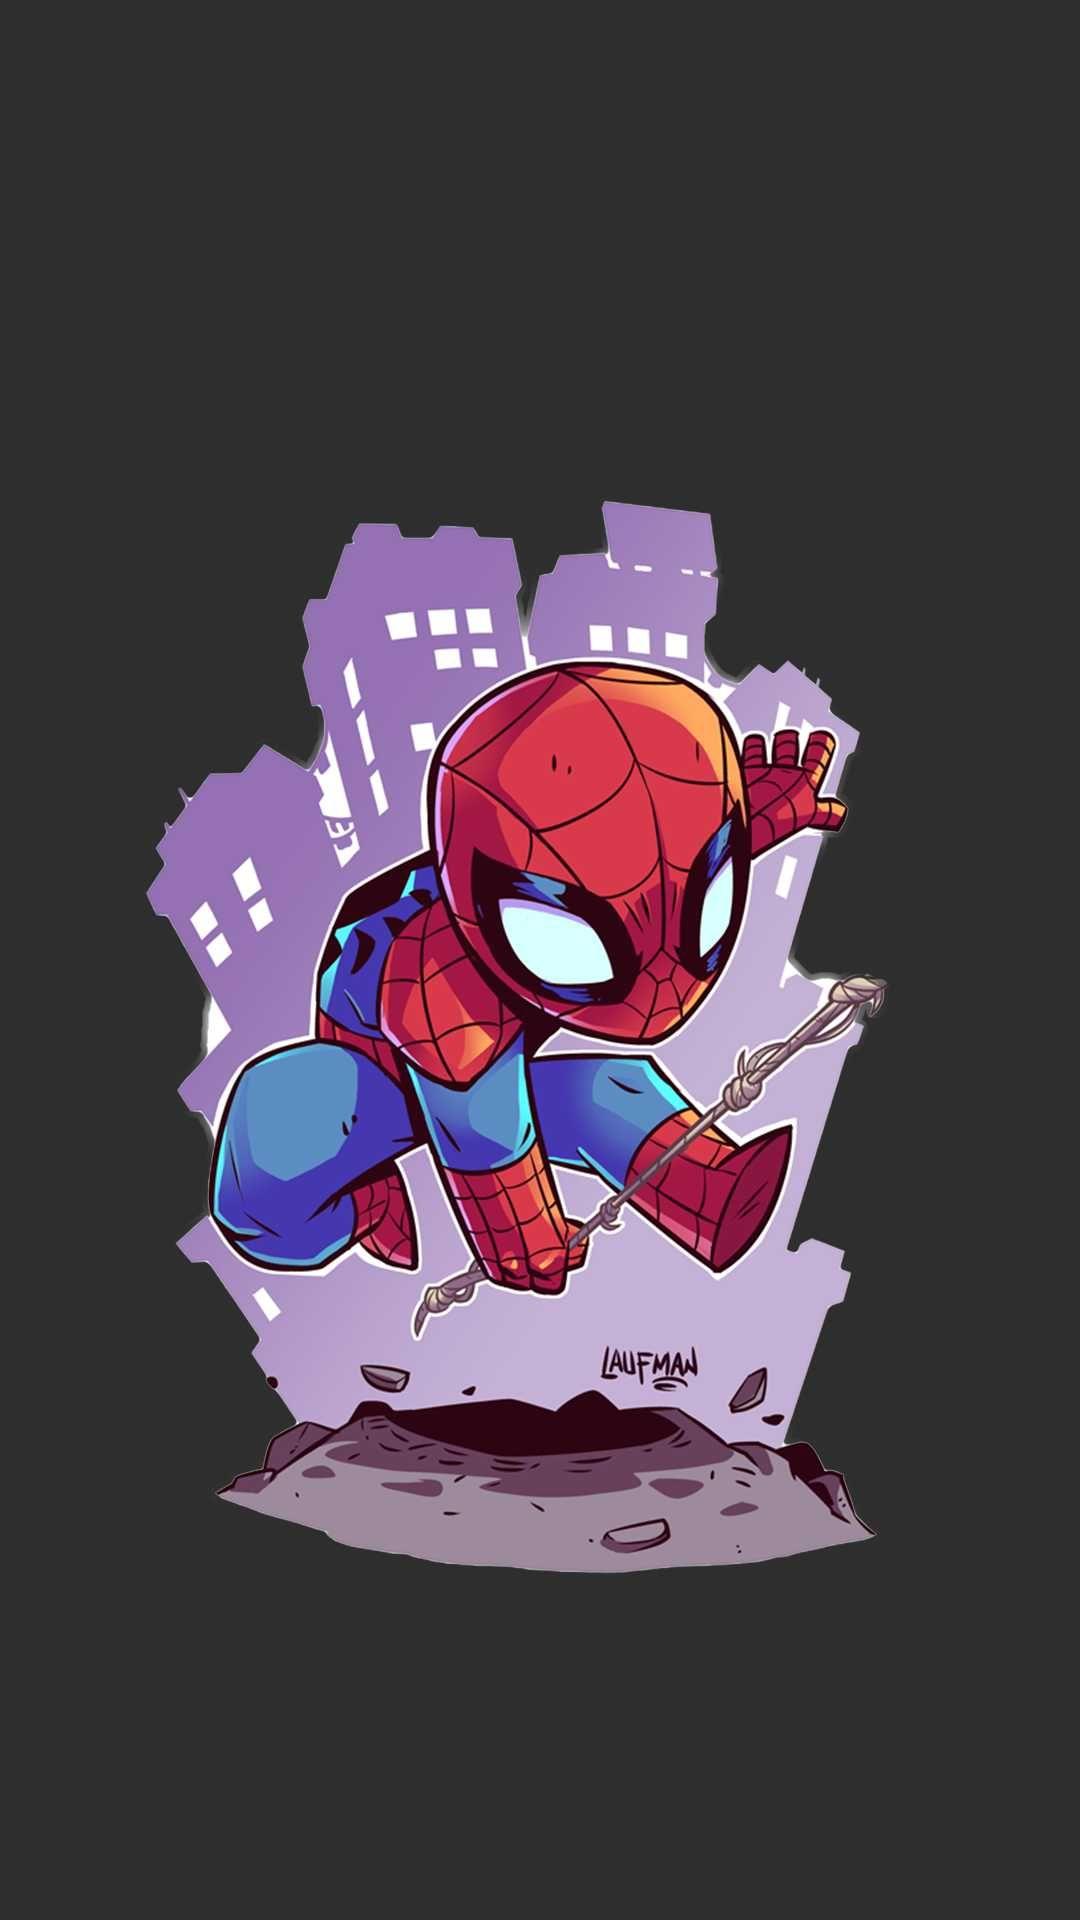 Spiderman Animated Art iPhone Wallpaper. Superhero wallpaper, Deadpool wallpaper, Marvel wallpaper